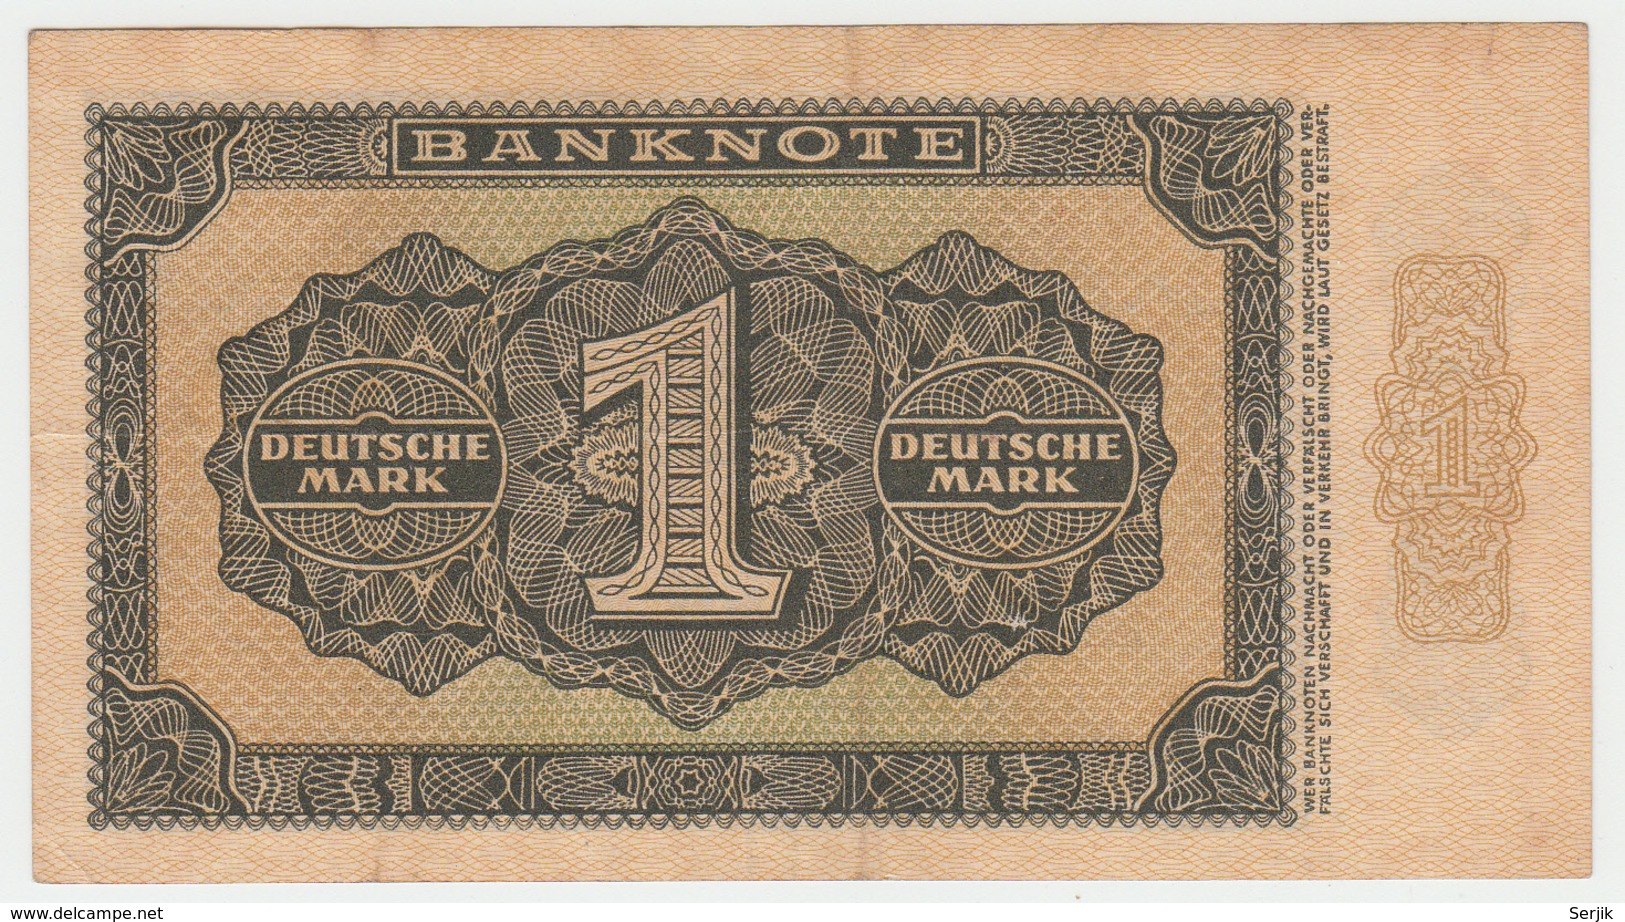 Germany Democratic Republic 1 Mark 1948 VF+ Pick 9b - 1 Deutsche Mark